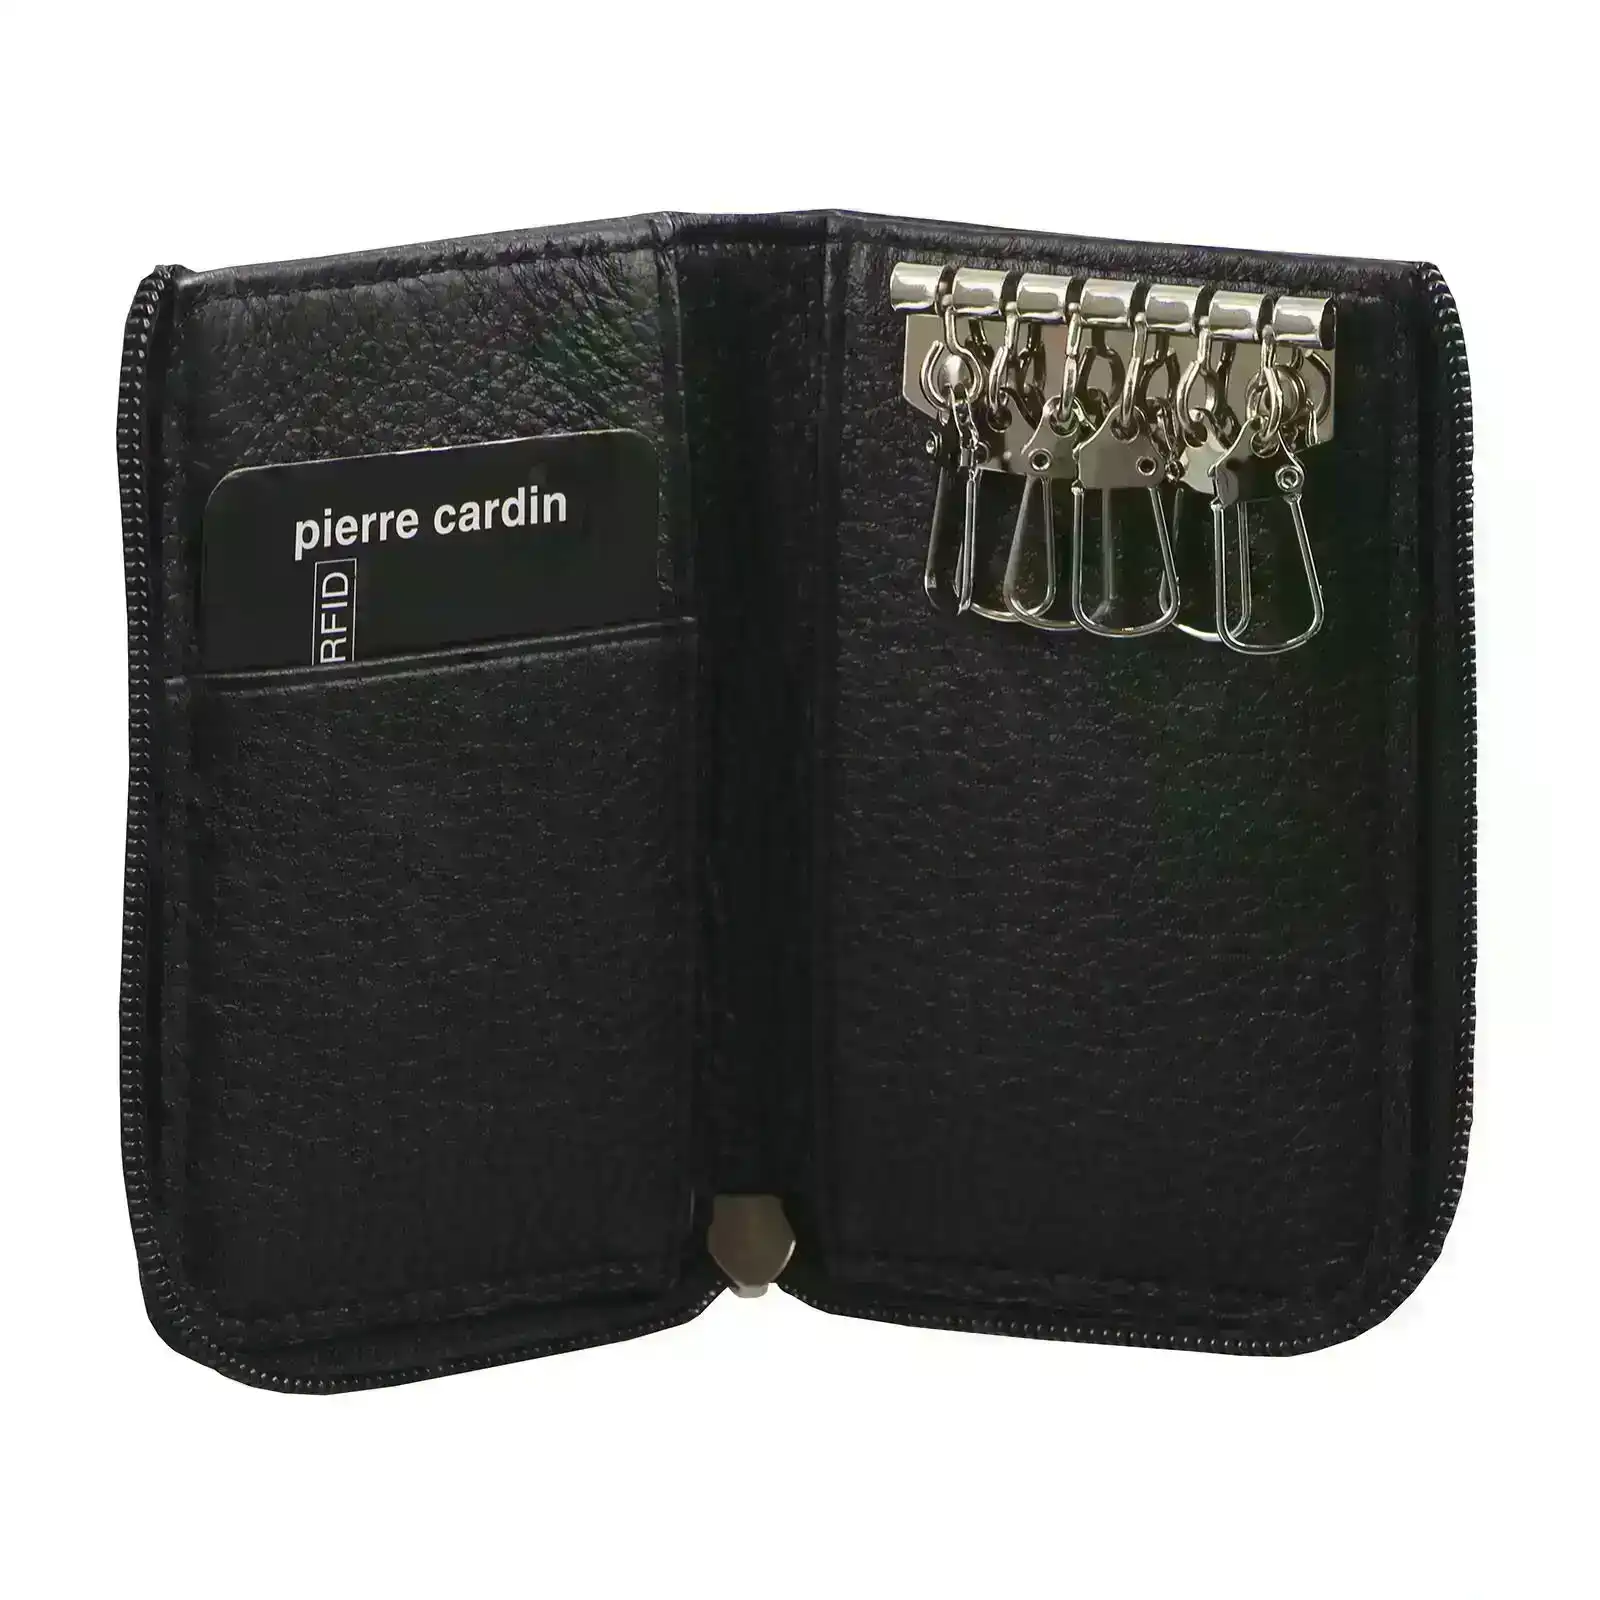 Pierre Cardin Mens Key Credit Card Holder Italian Leather Purse - Black